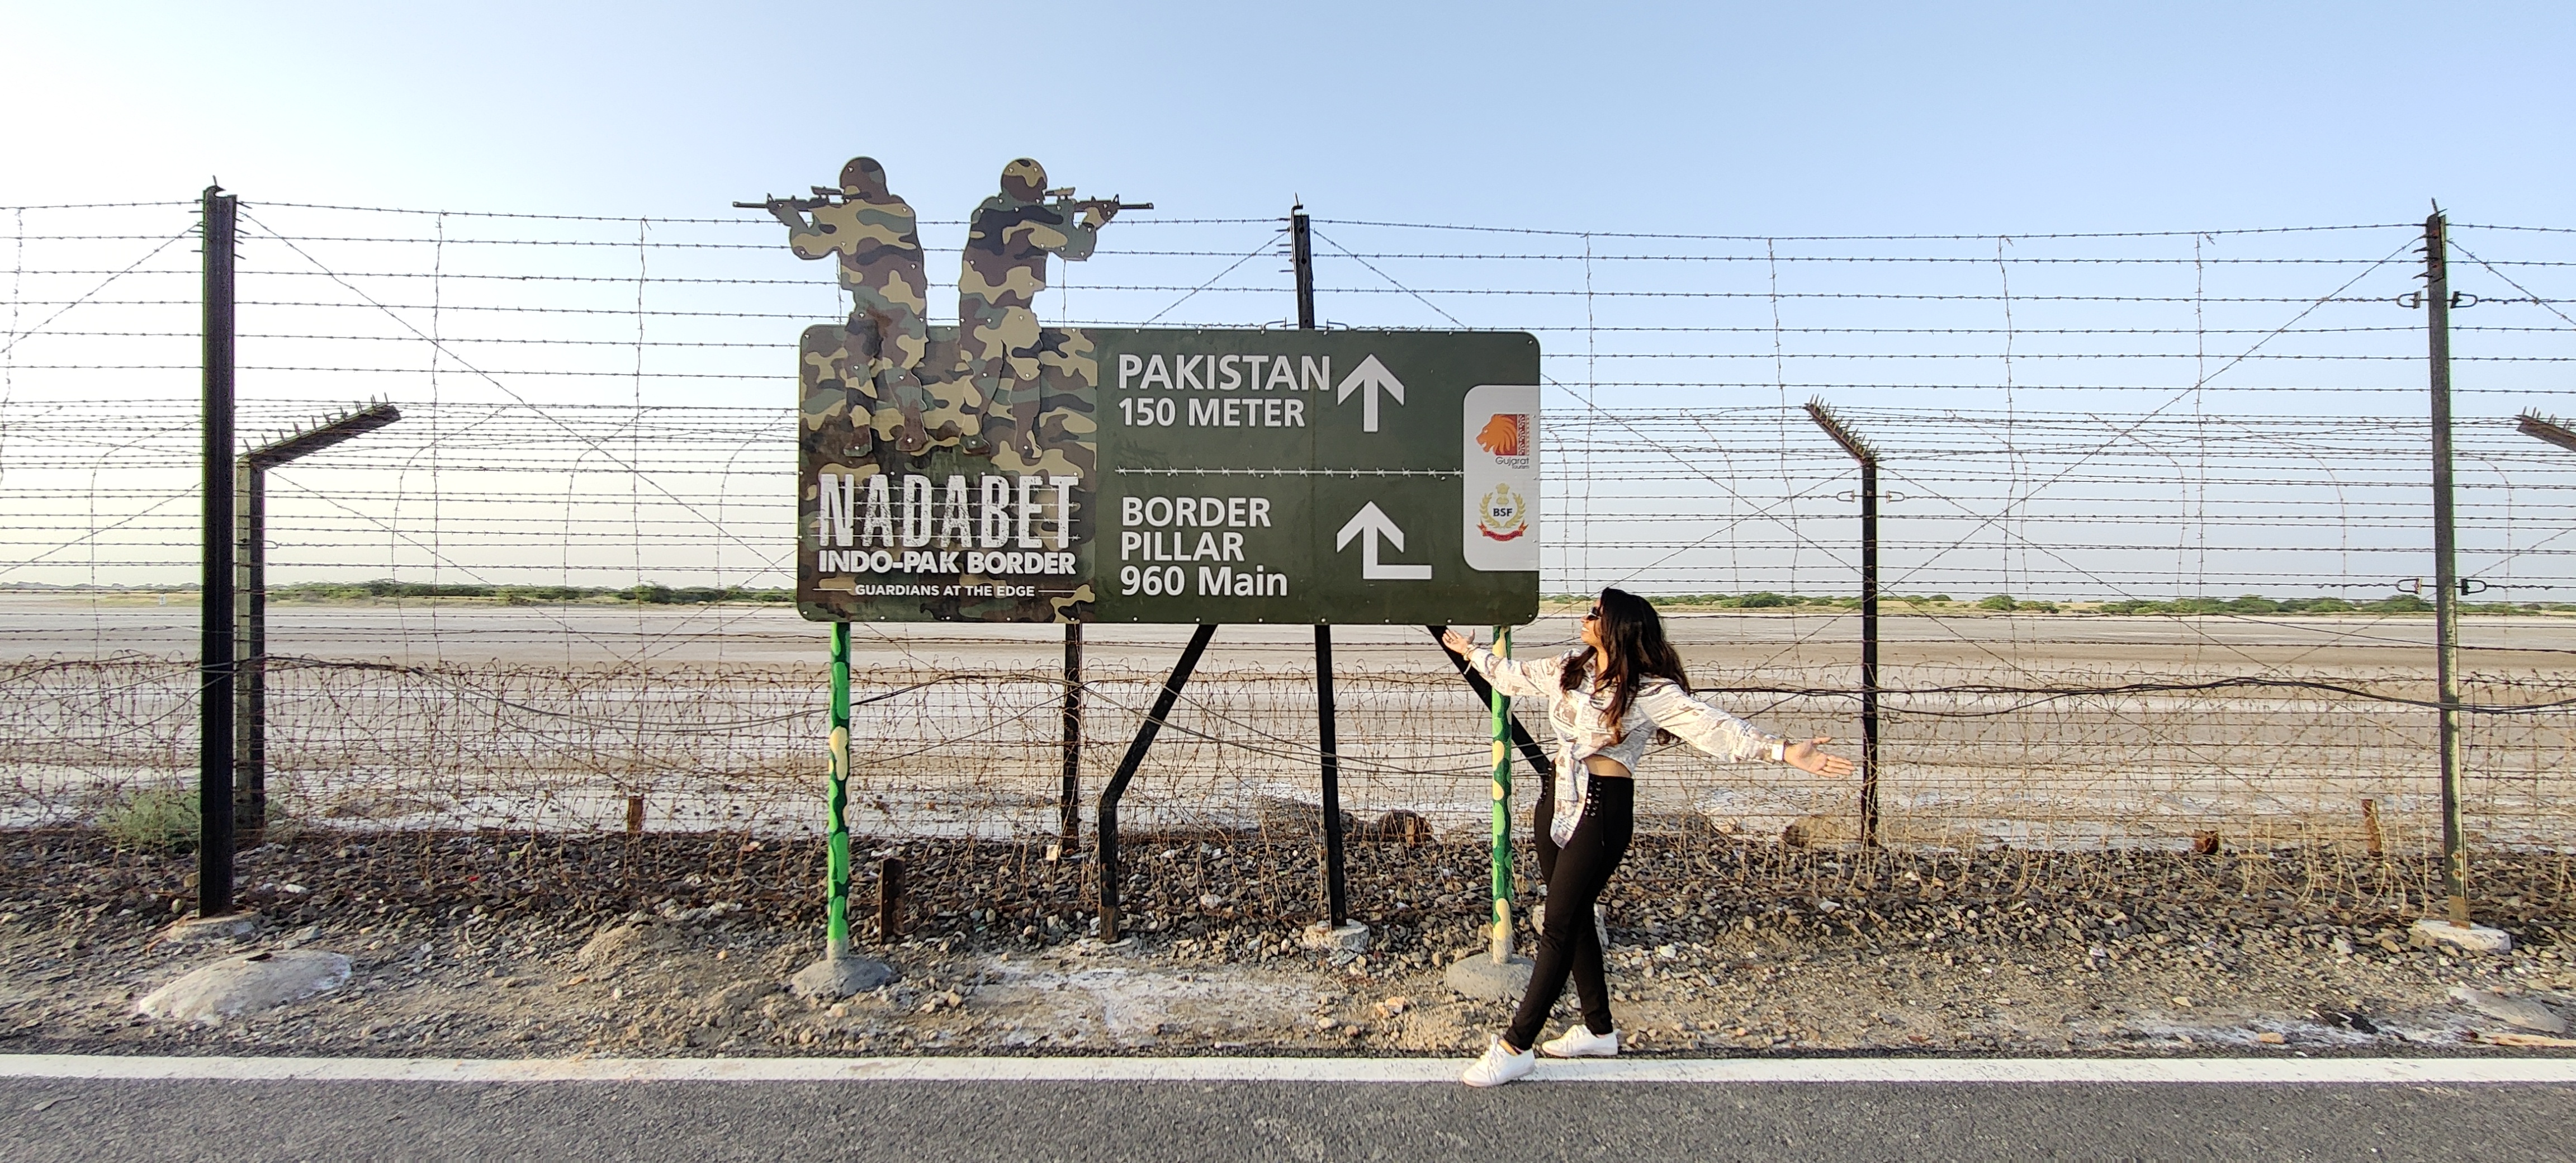 India - Pakistan border, nadabet